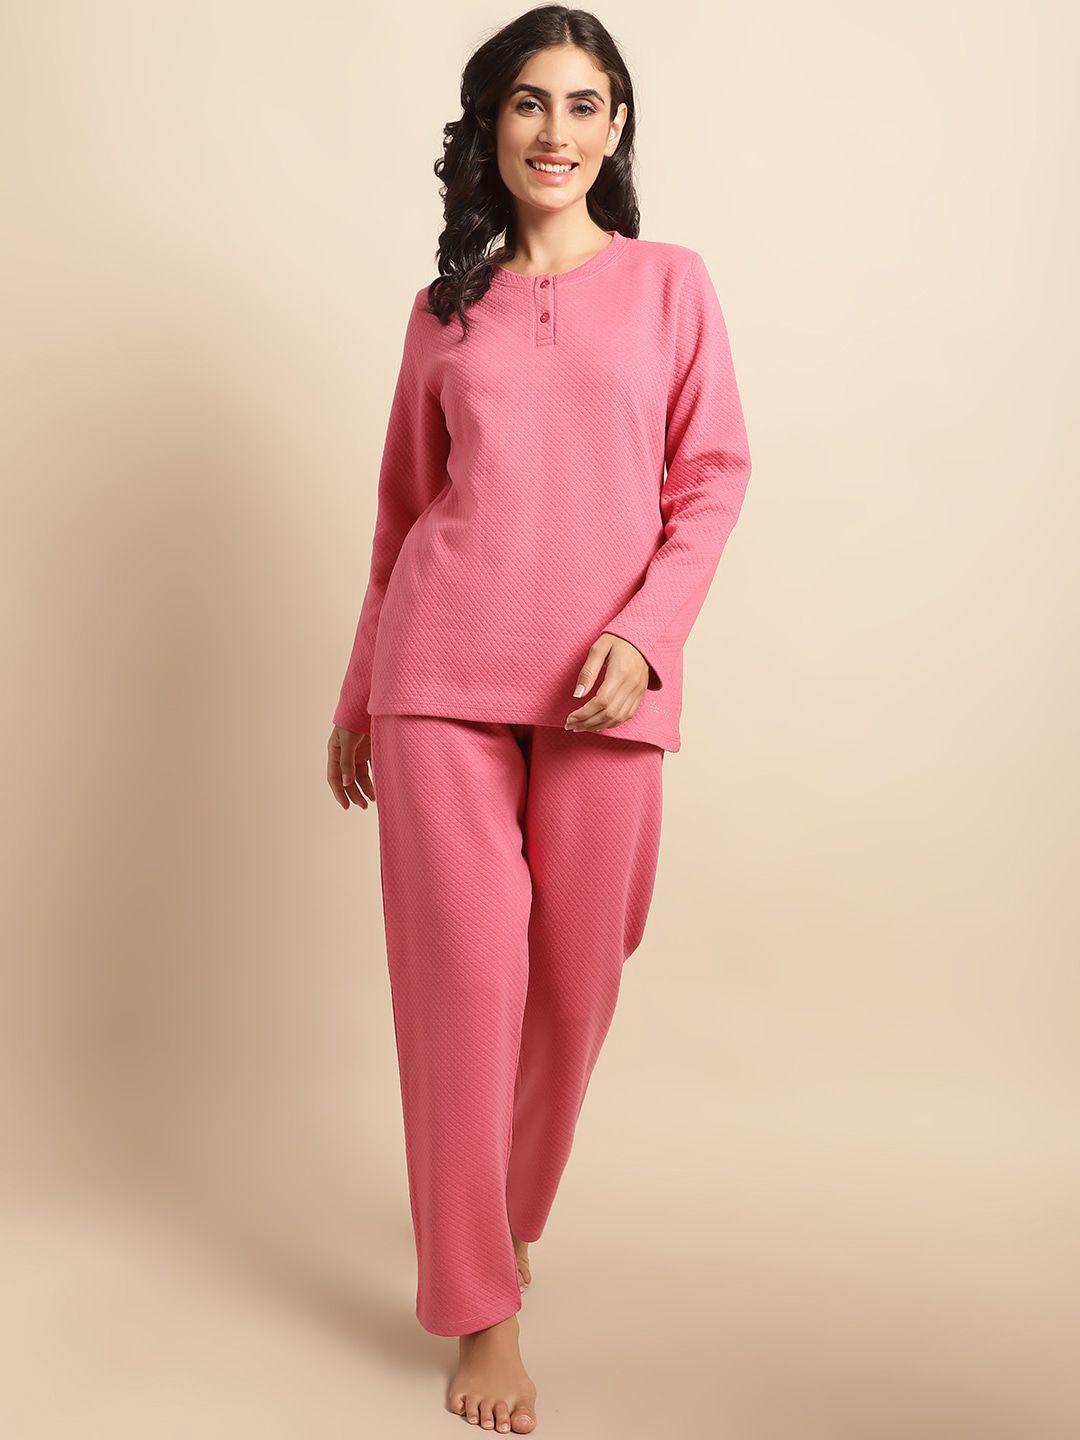 kanvin women pink night suit